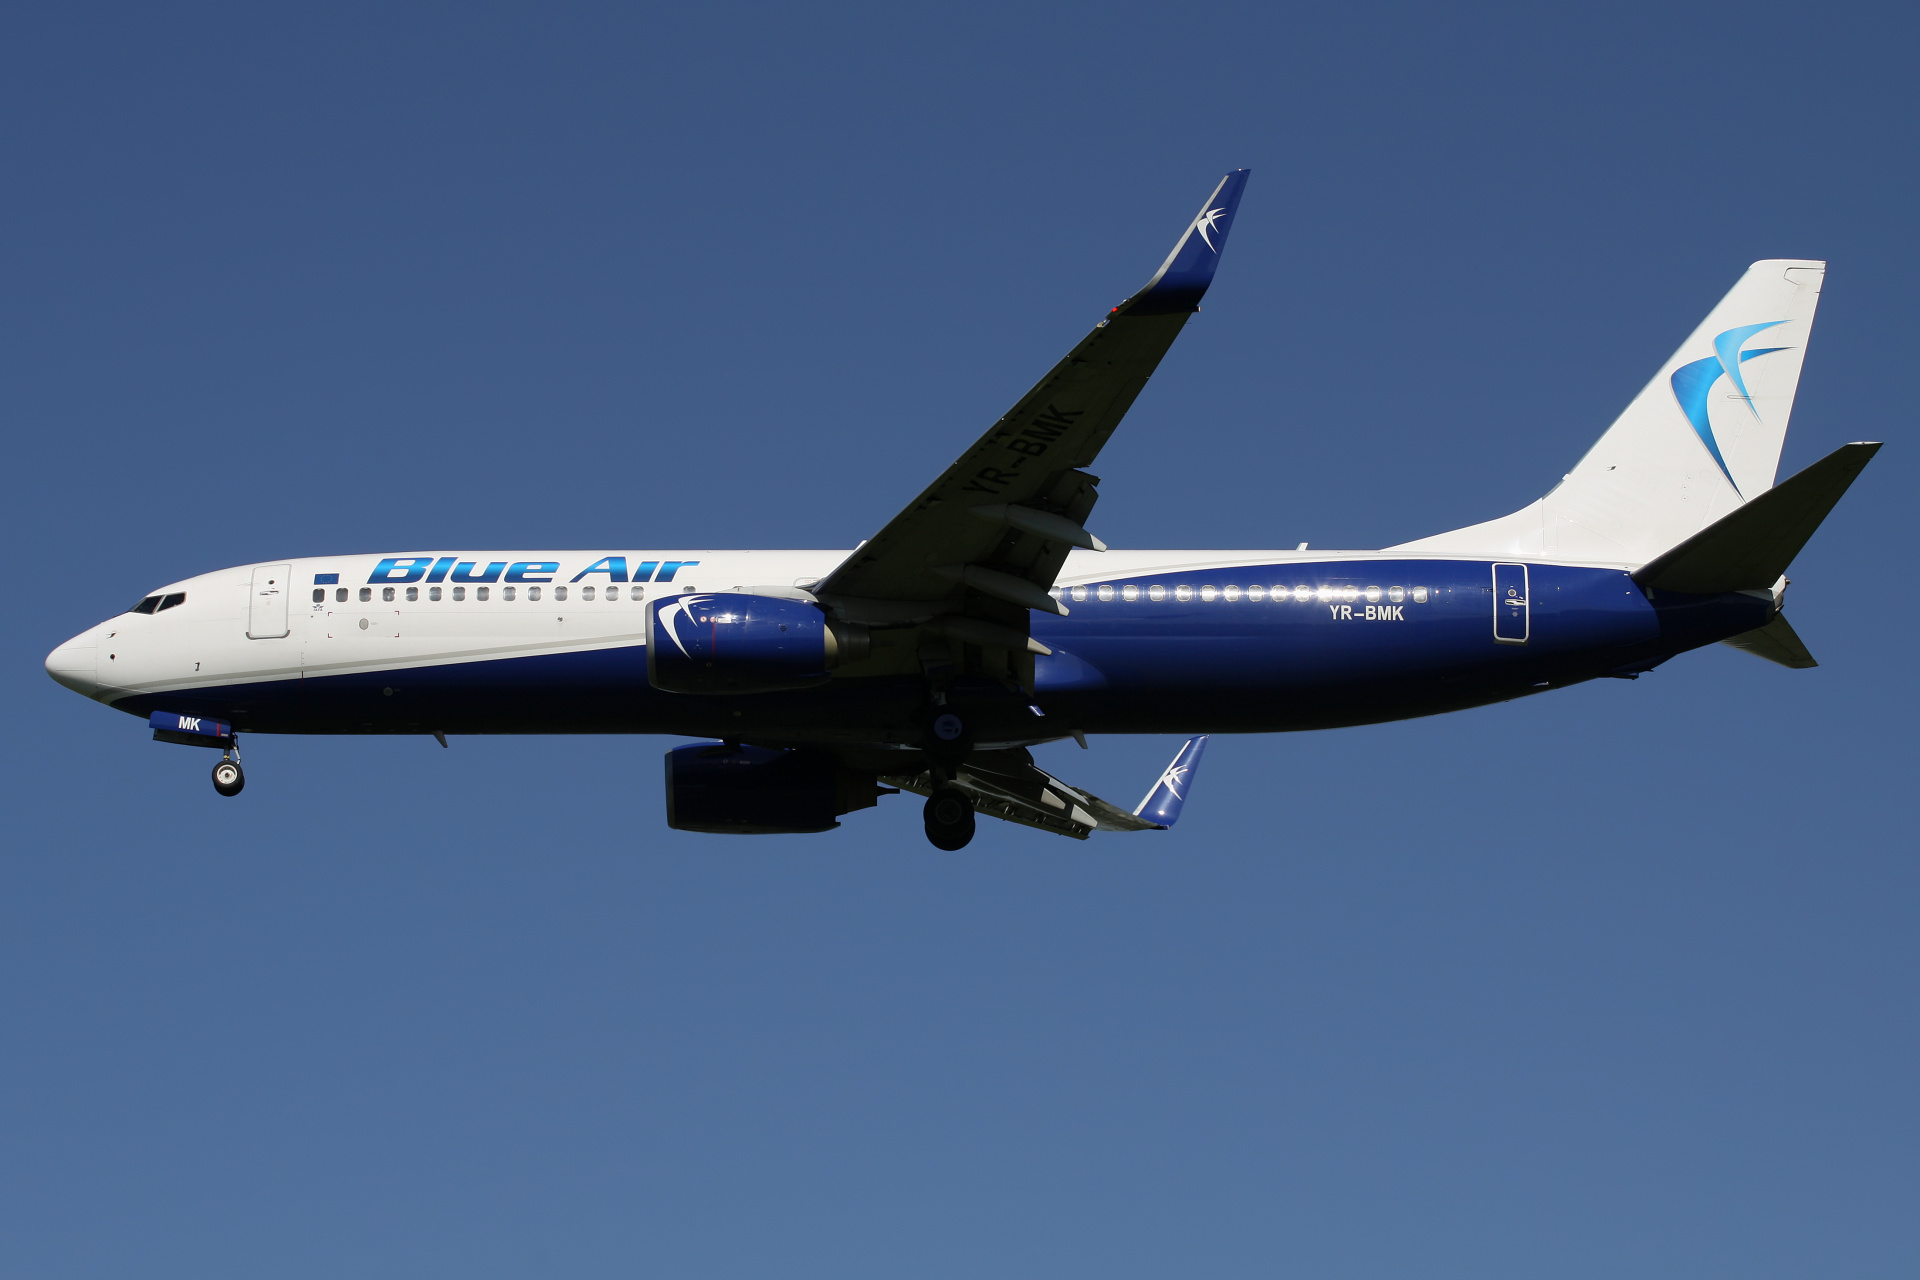 YR-BMK (Aircraft » EPWA Spotting » Boeing 737-800 » Blue Air)